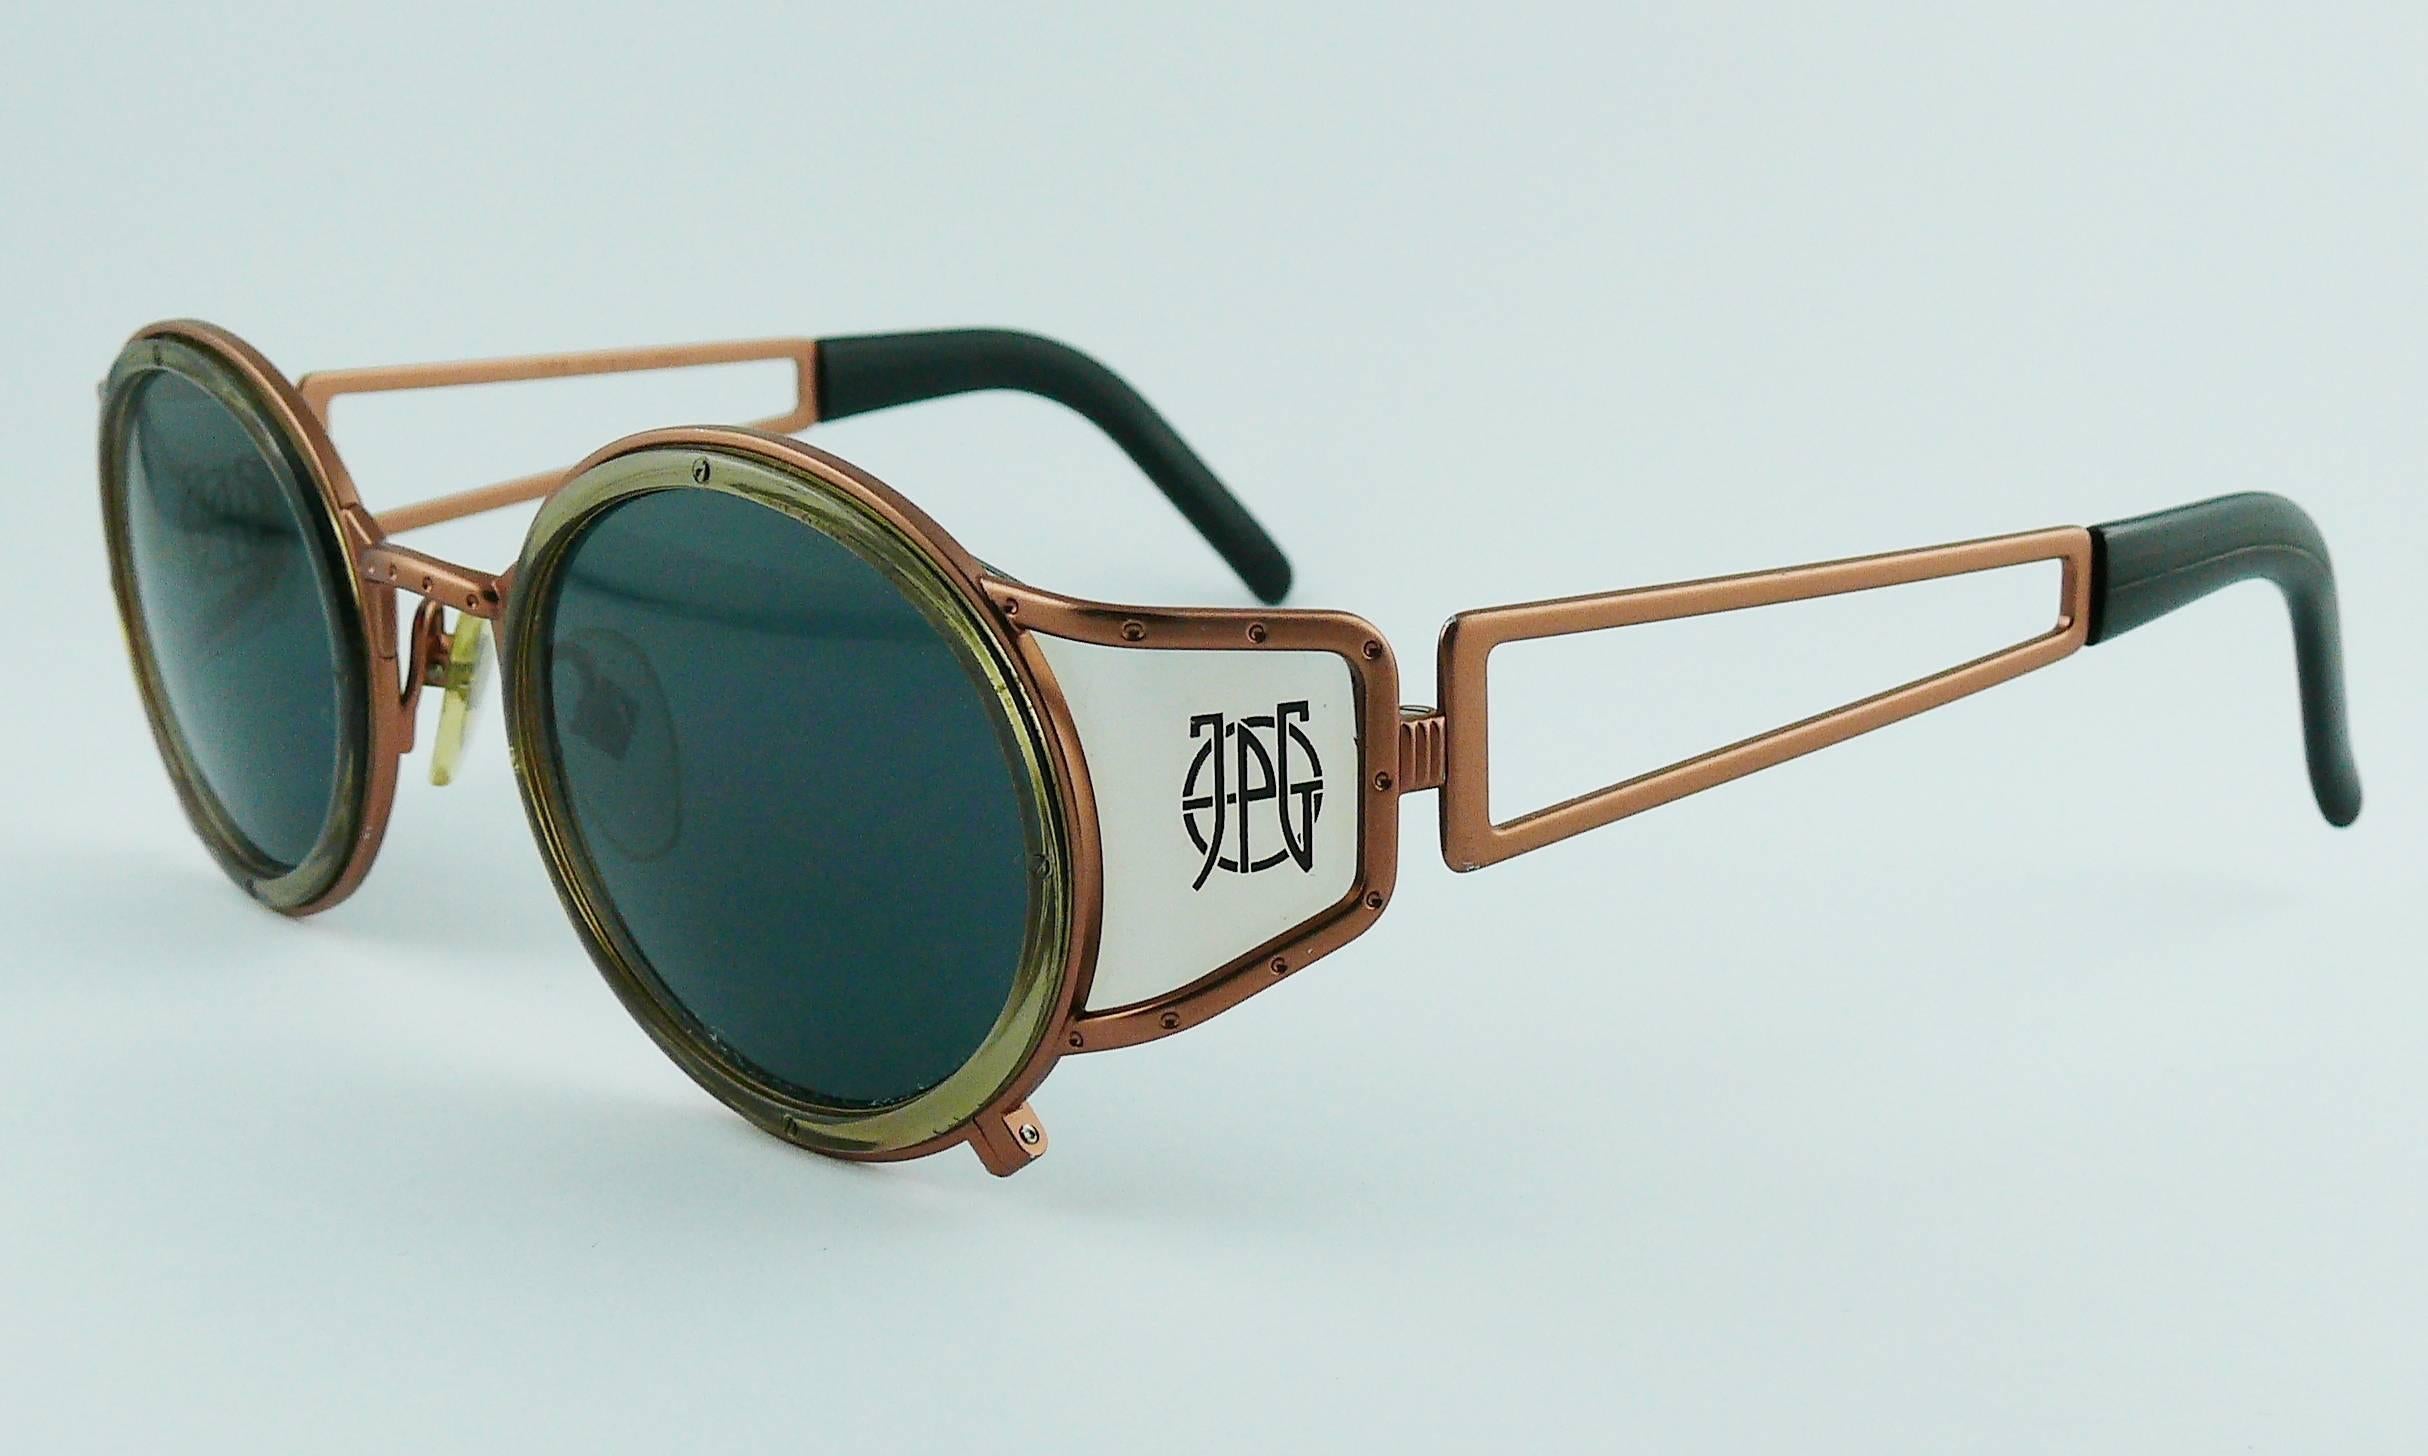 retro sunglasses with side shields